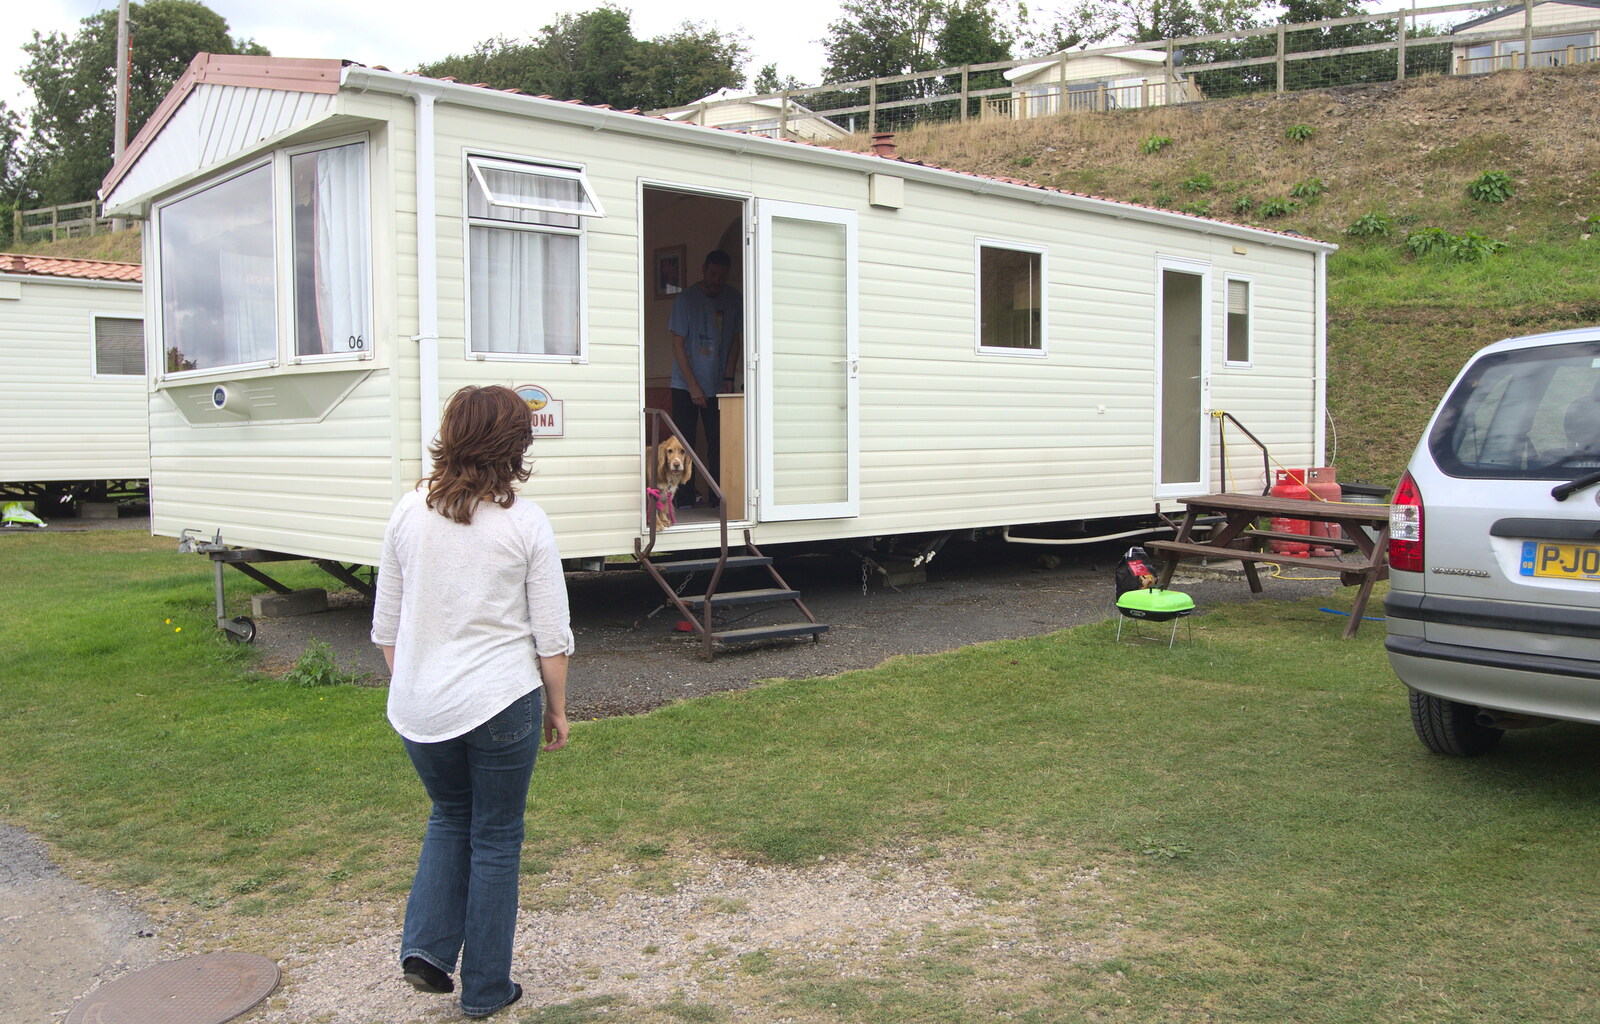 The caravan from Camping With Sean, Ashburton, Devon - 8th August 2016